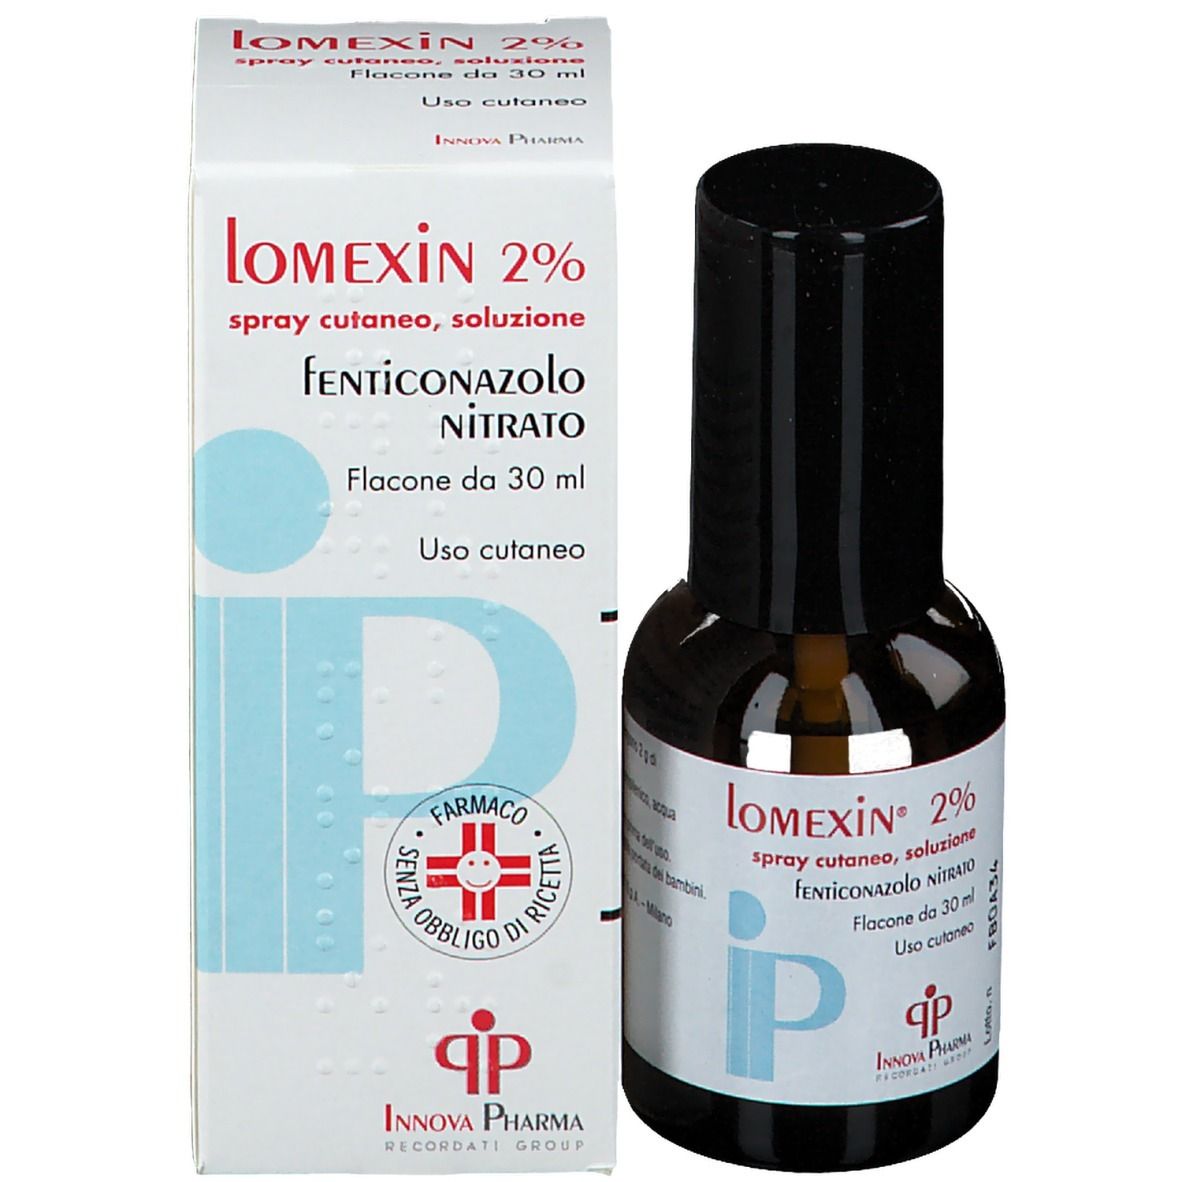 Lomexin 2% spray cutaneo, soluzione